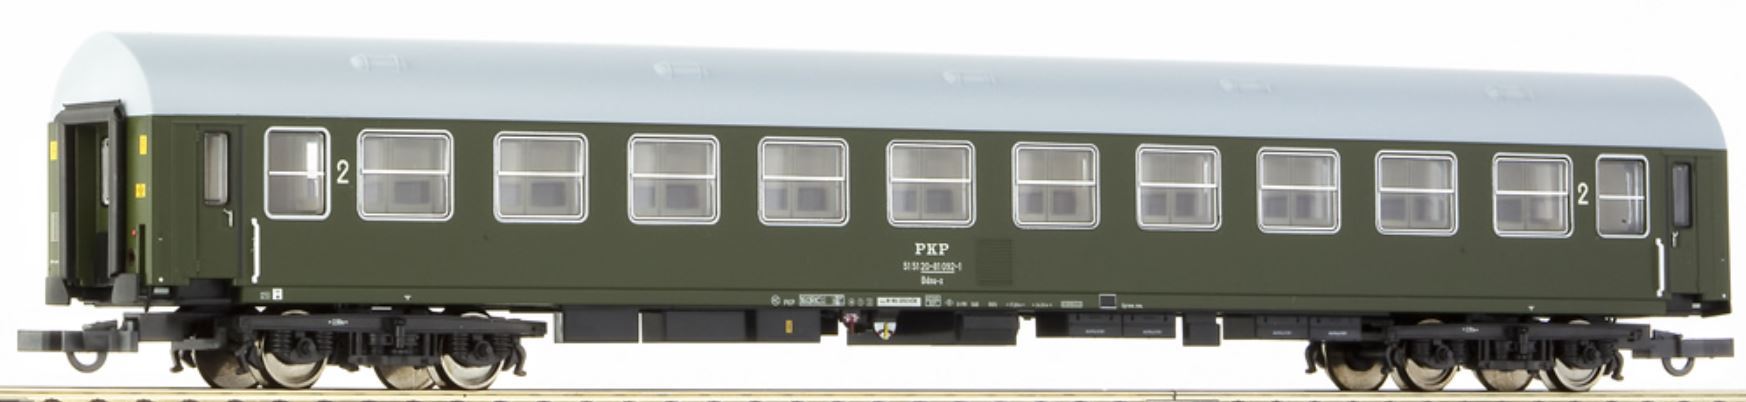 Roco 64816 H0 2nd Class Passenger Car, PKP